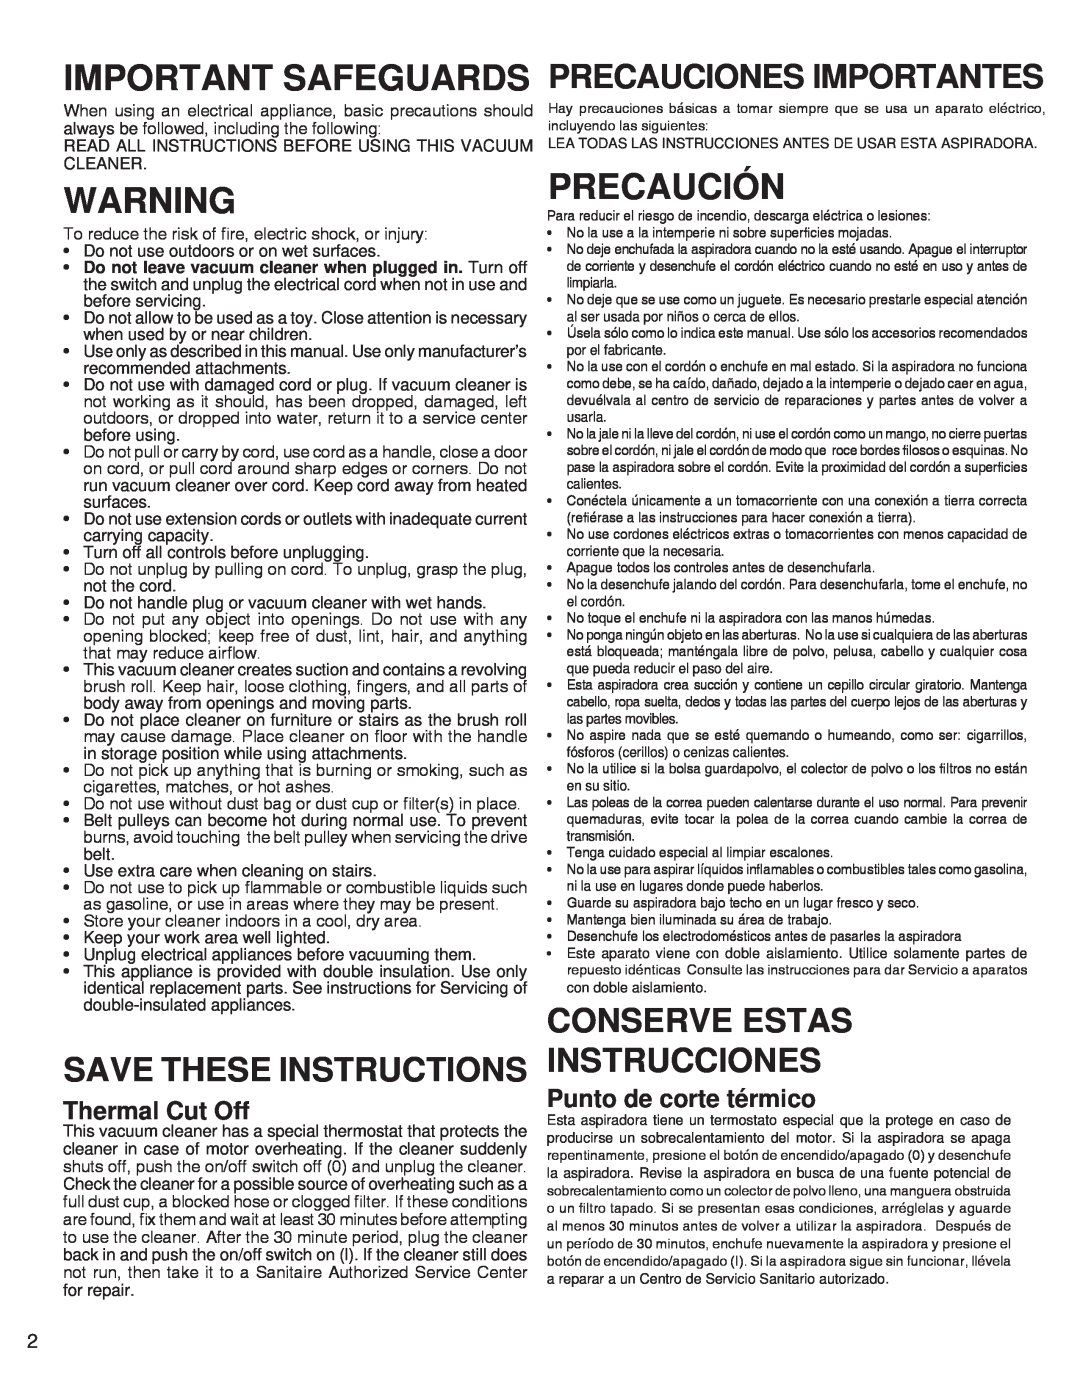 Electrolux SC5700/5800 SERIES warranty Important Safeguards, Precaución, Save These Instructions, Precauciones Importantes 